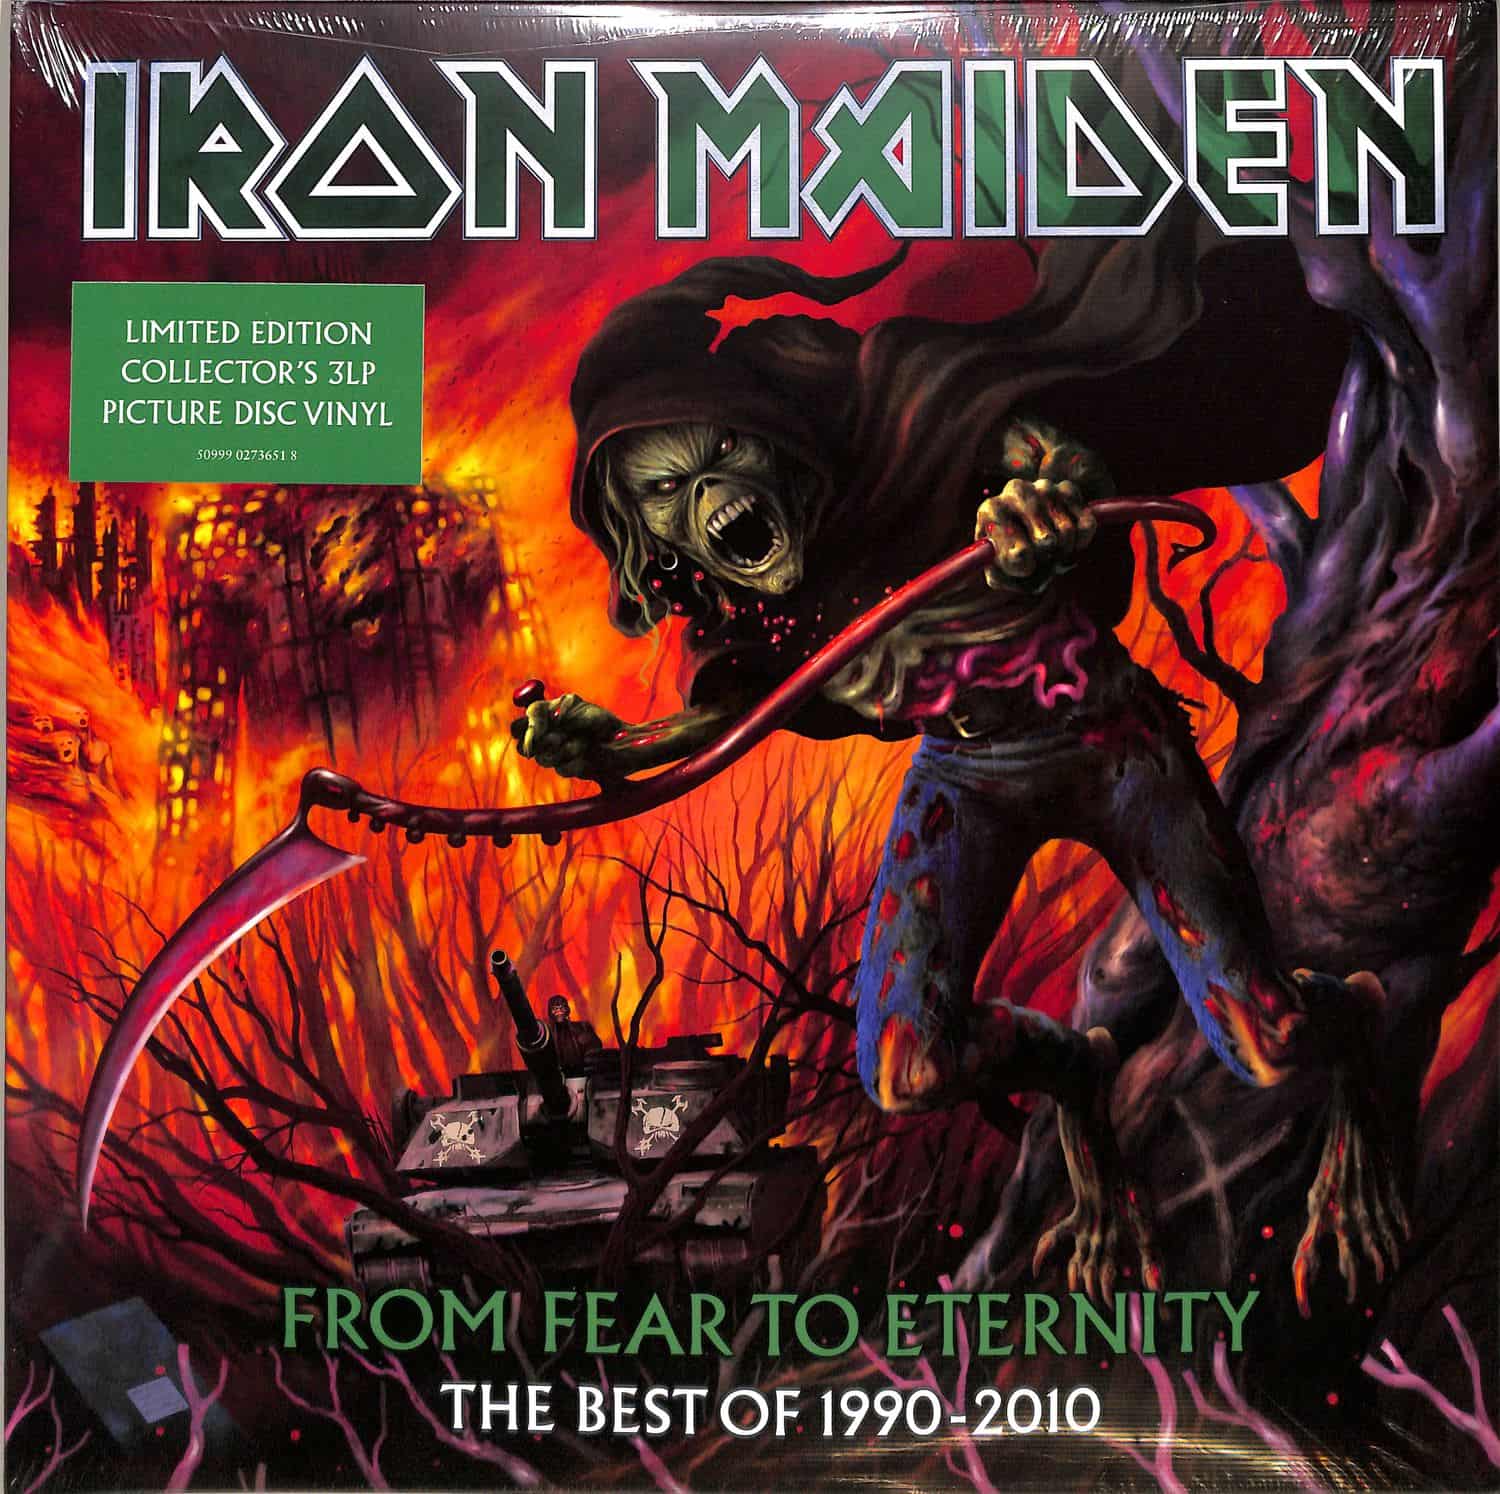 Iron Maiden - THE BEST OF 1990-2010 